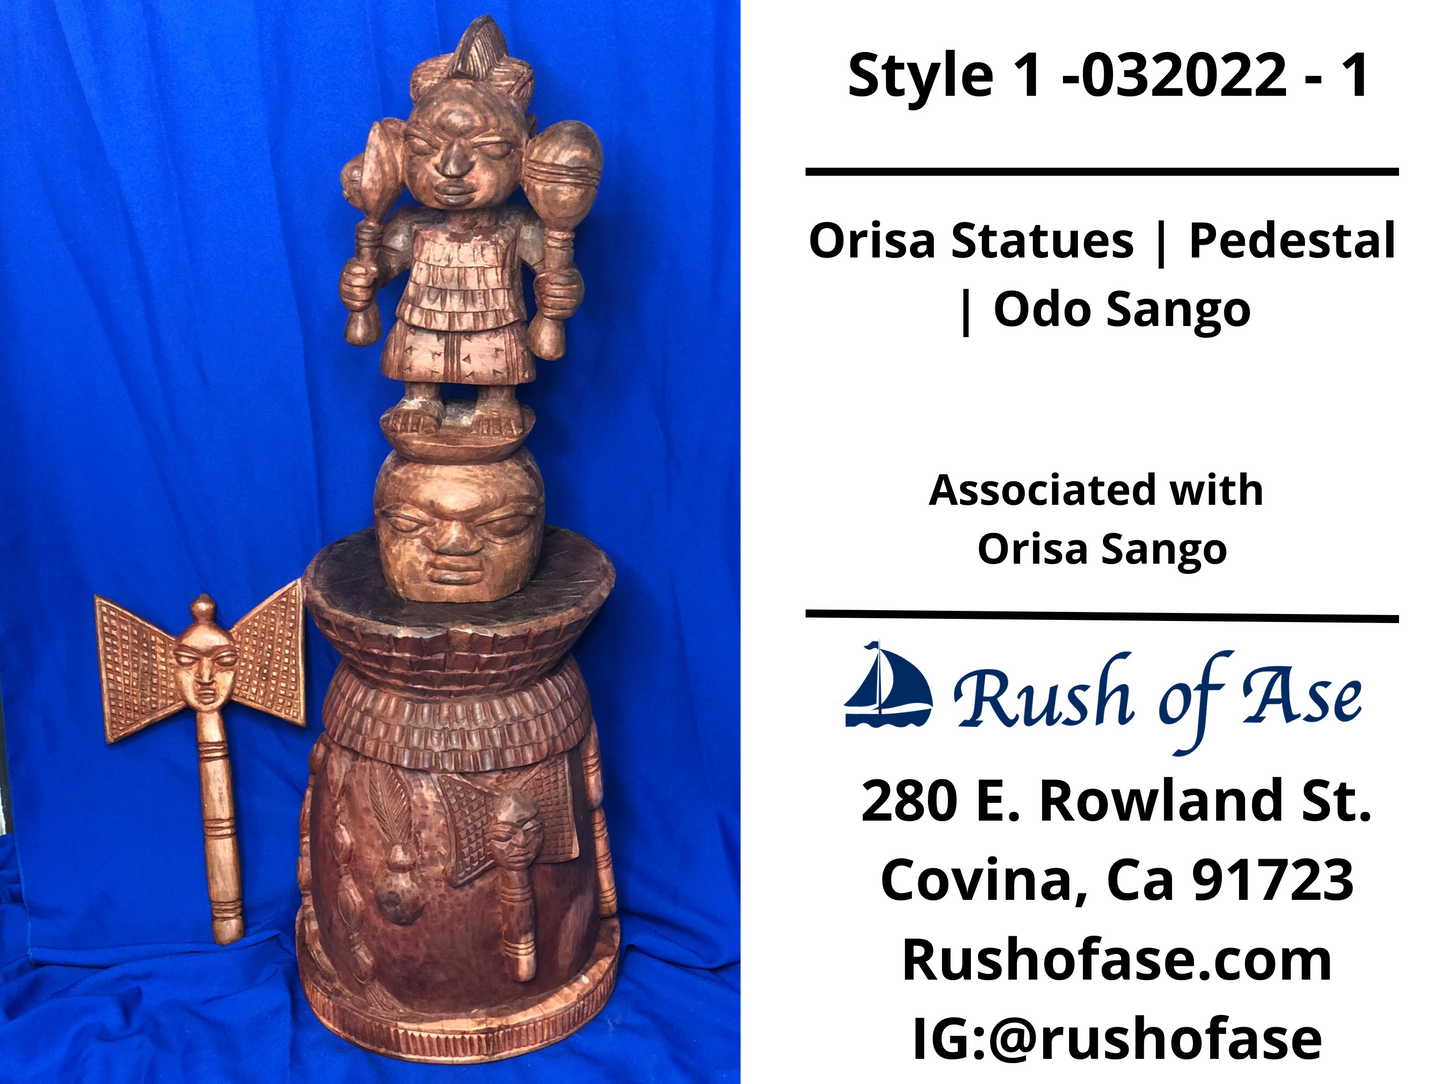 Orisa Statues | Pedestal | Odo Sango